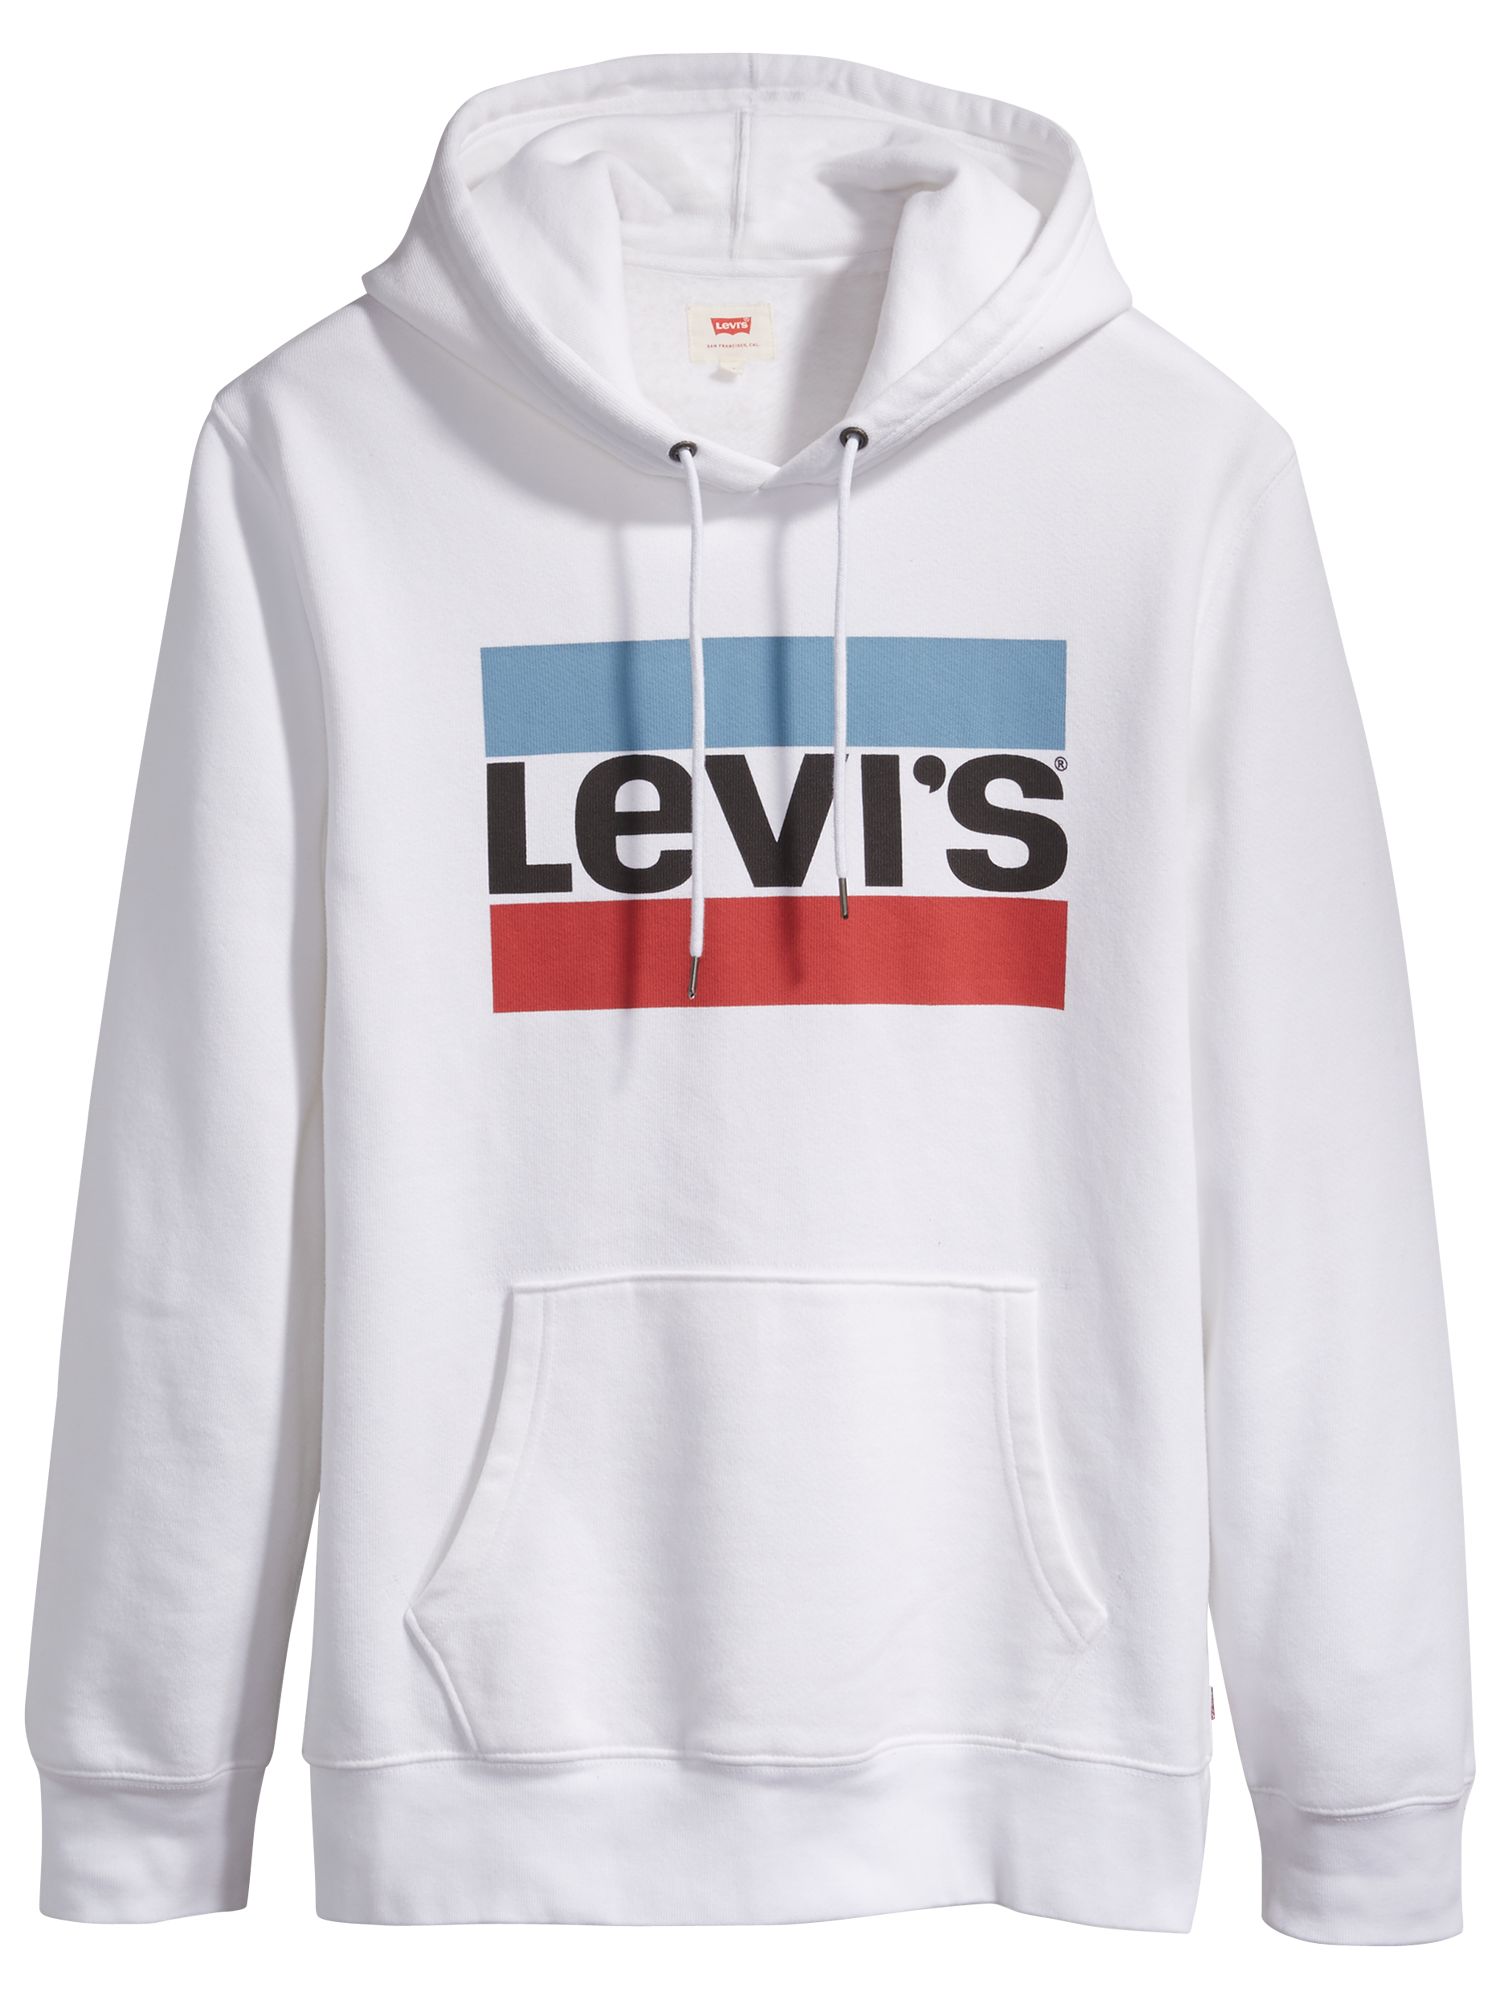 levis white hoodie